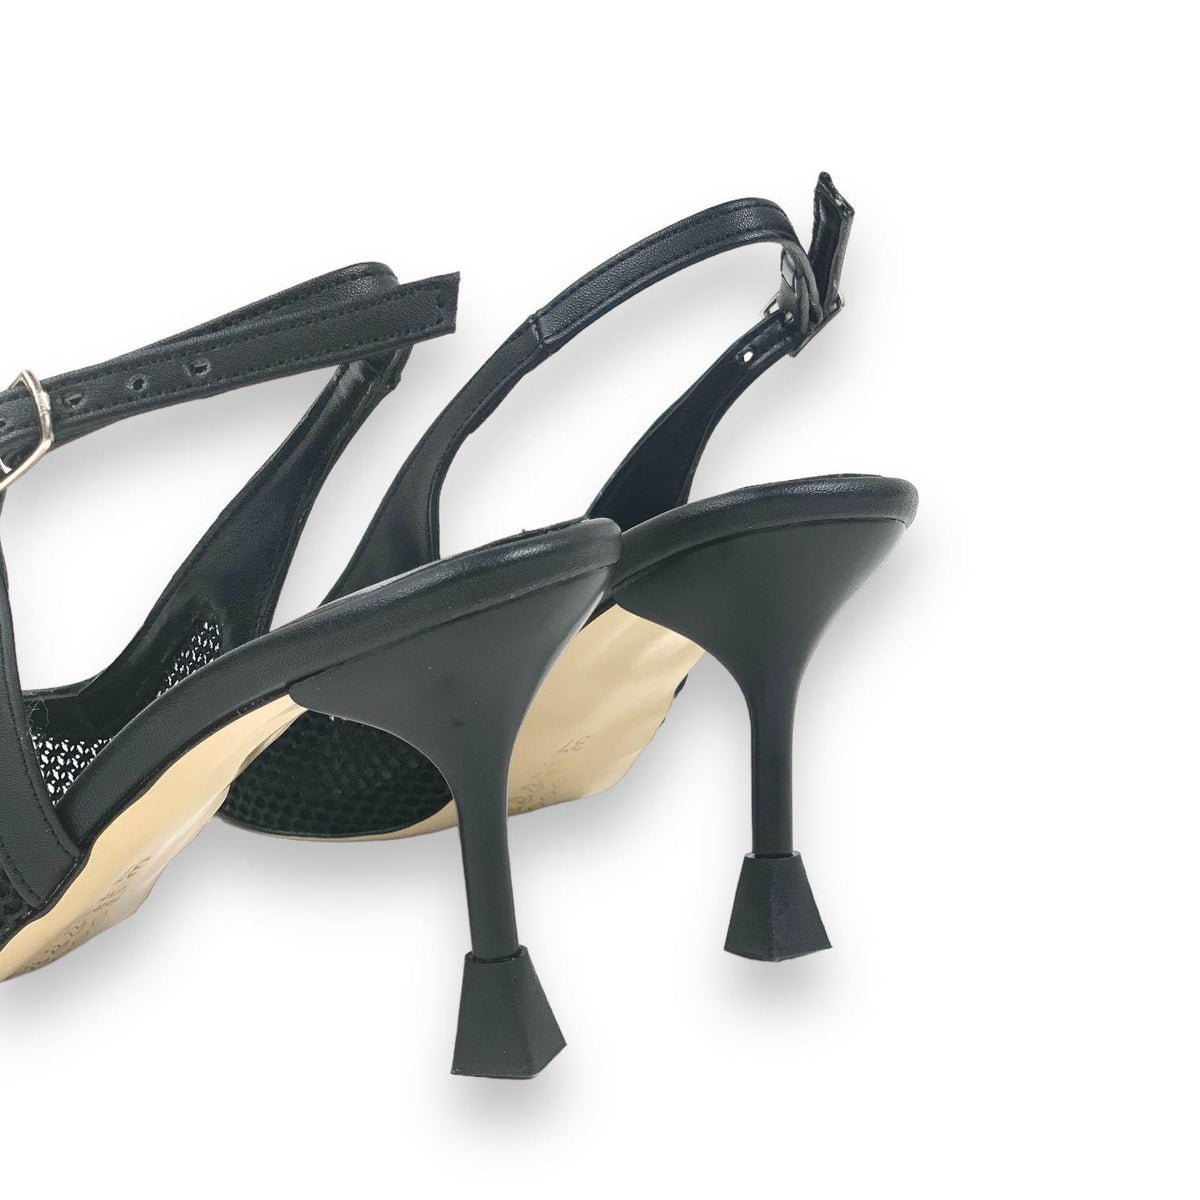 Women's Yabv Black Mesh Detailed Summer Shoes Sandals 7 cm - STREETMODE ™